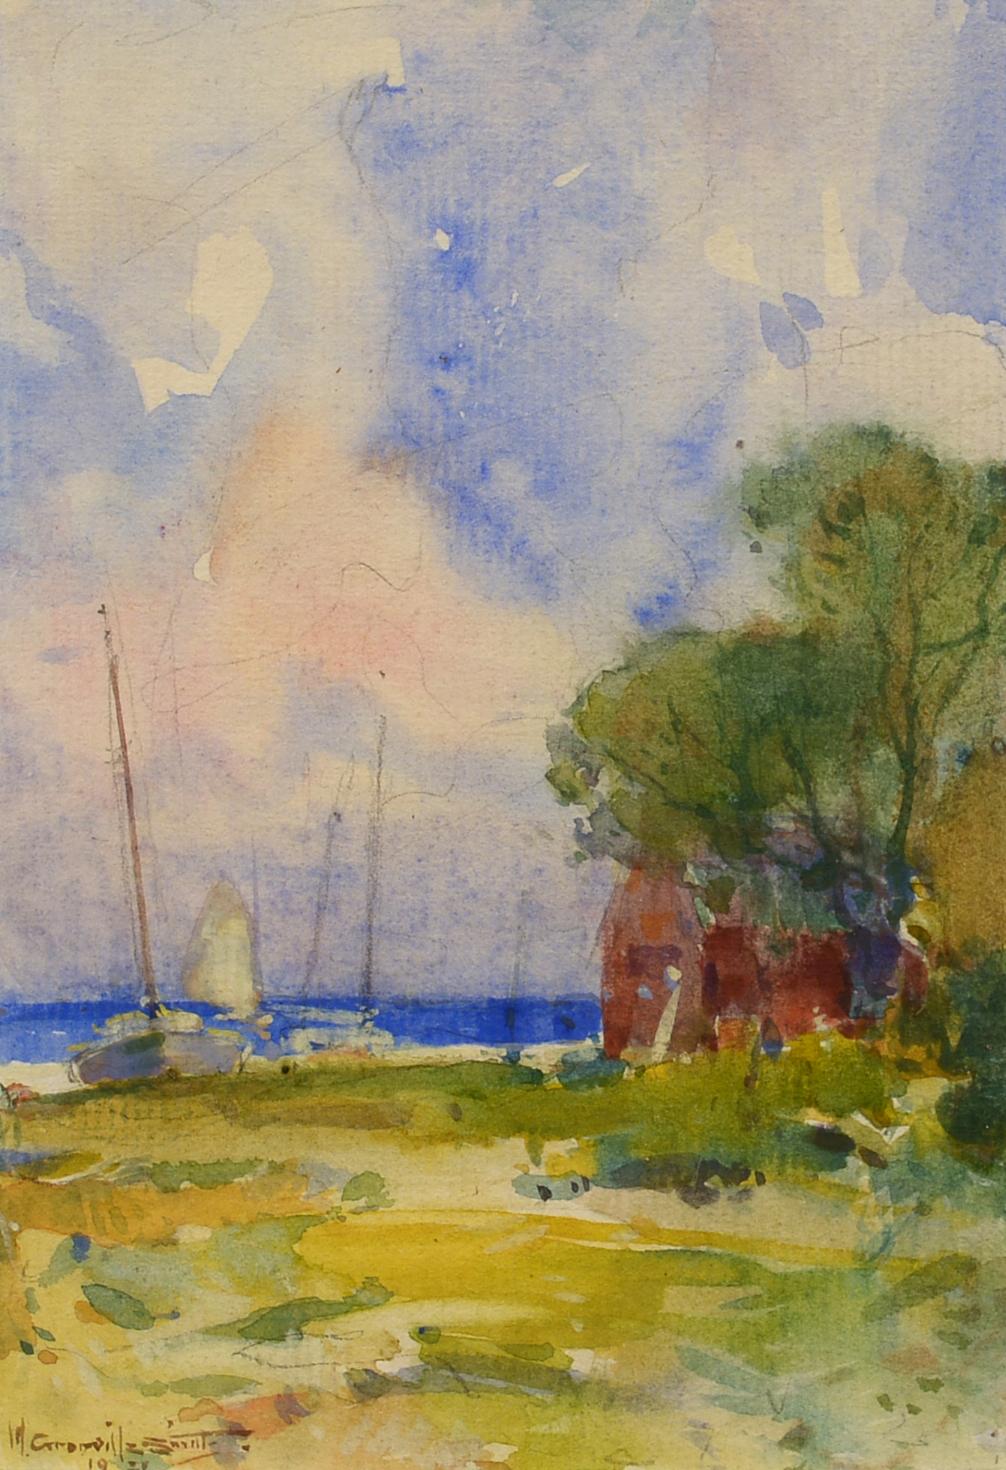 Walter Granville-Smith Landscape Art - "Sailboats Along the Shore" Early 20th Century American Impressionist Watercolor